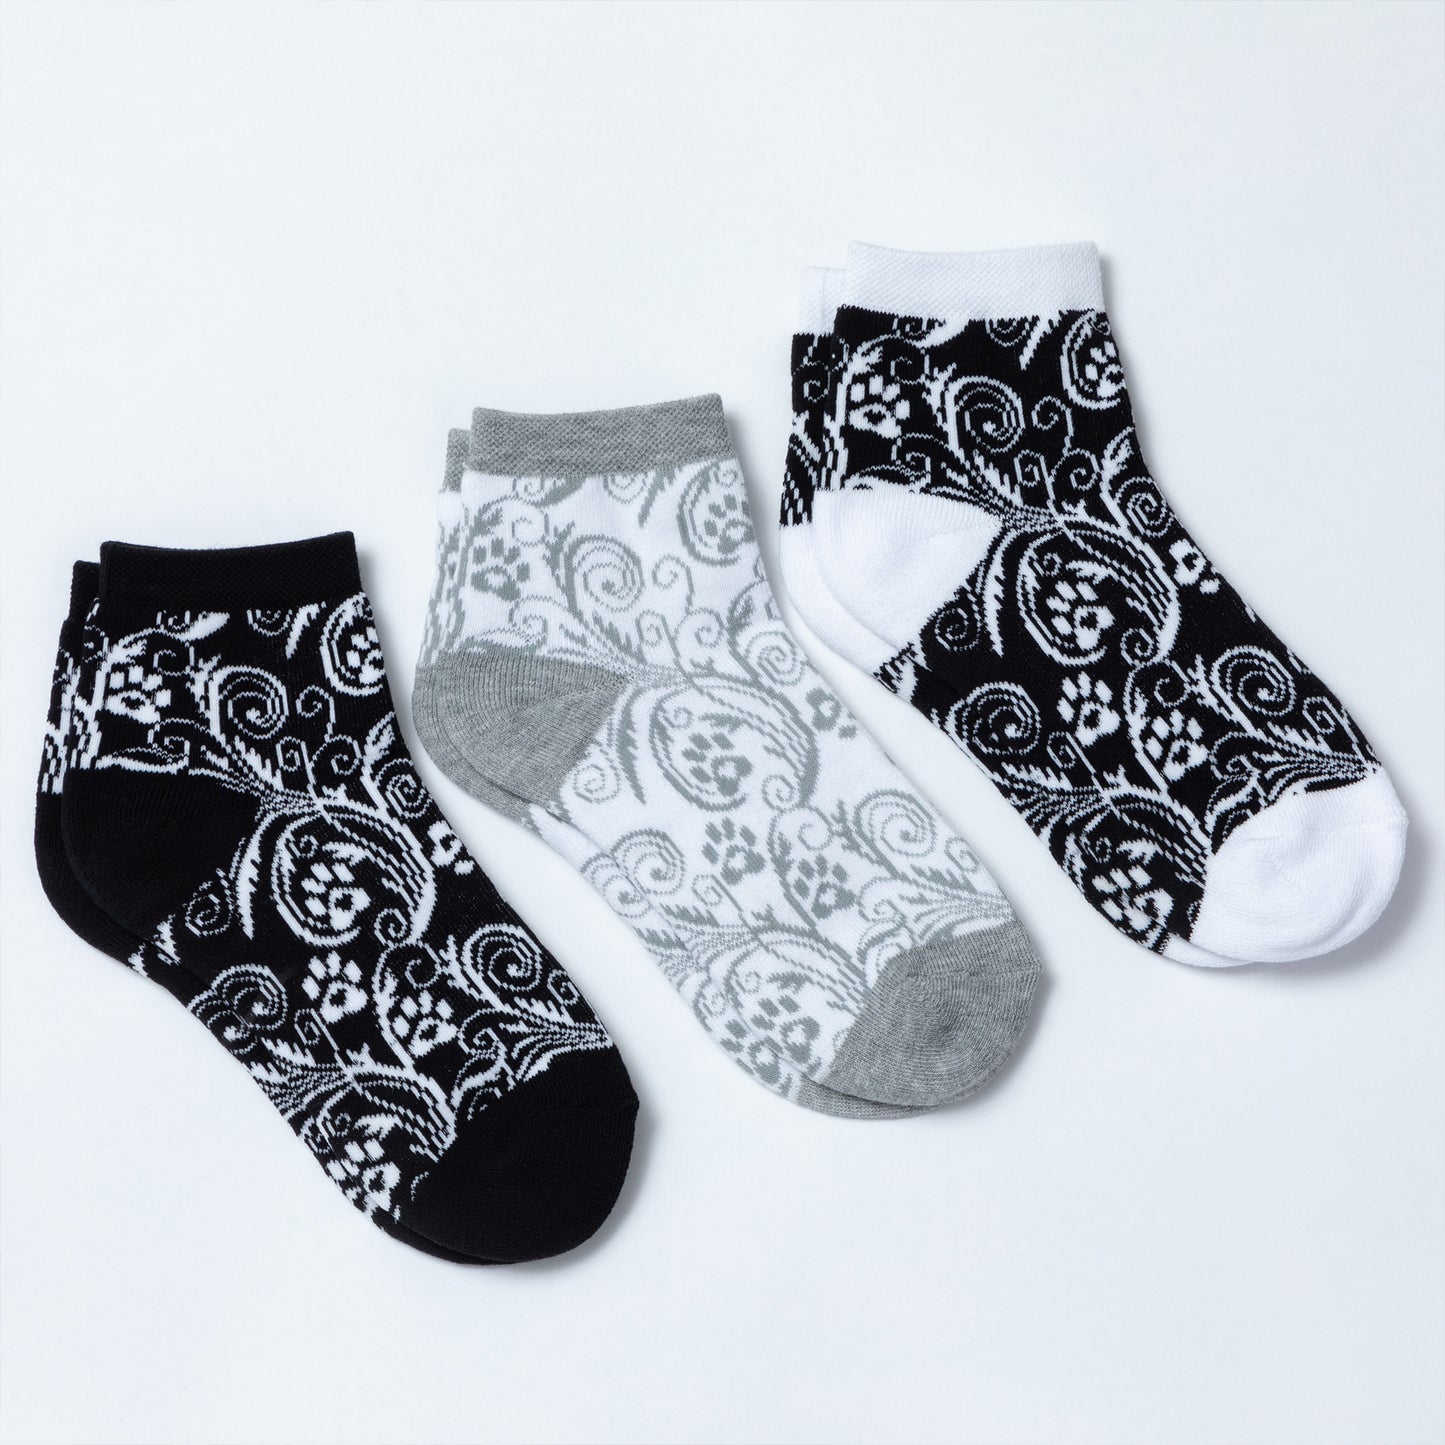 Flourish Paws Sport Socks - Set of 3